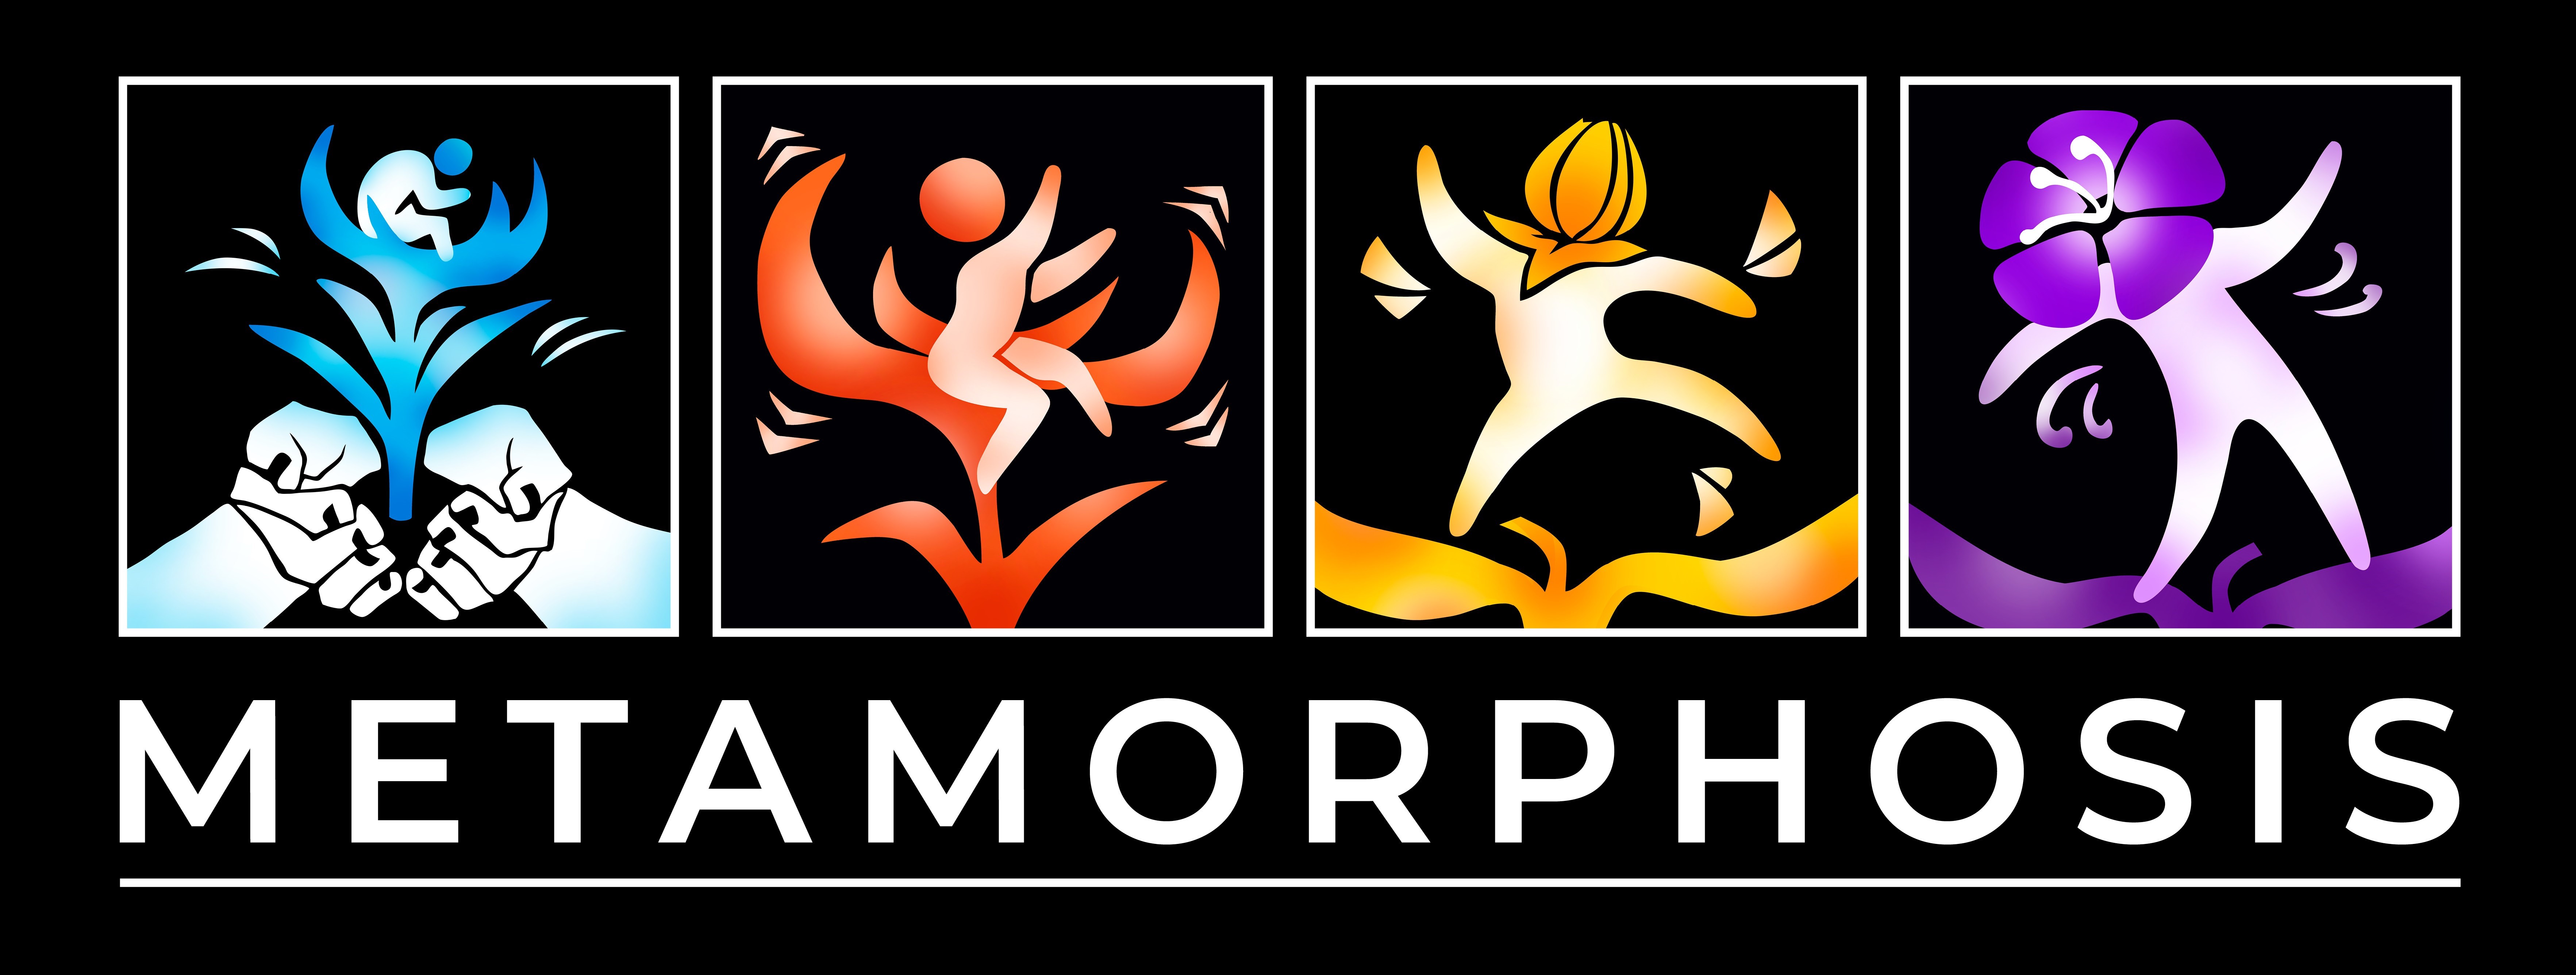 Metamorphosis graphics